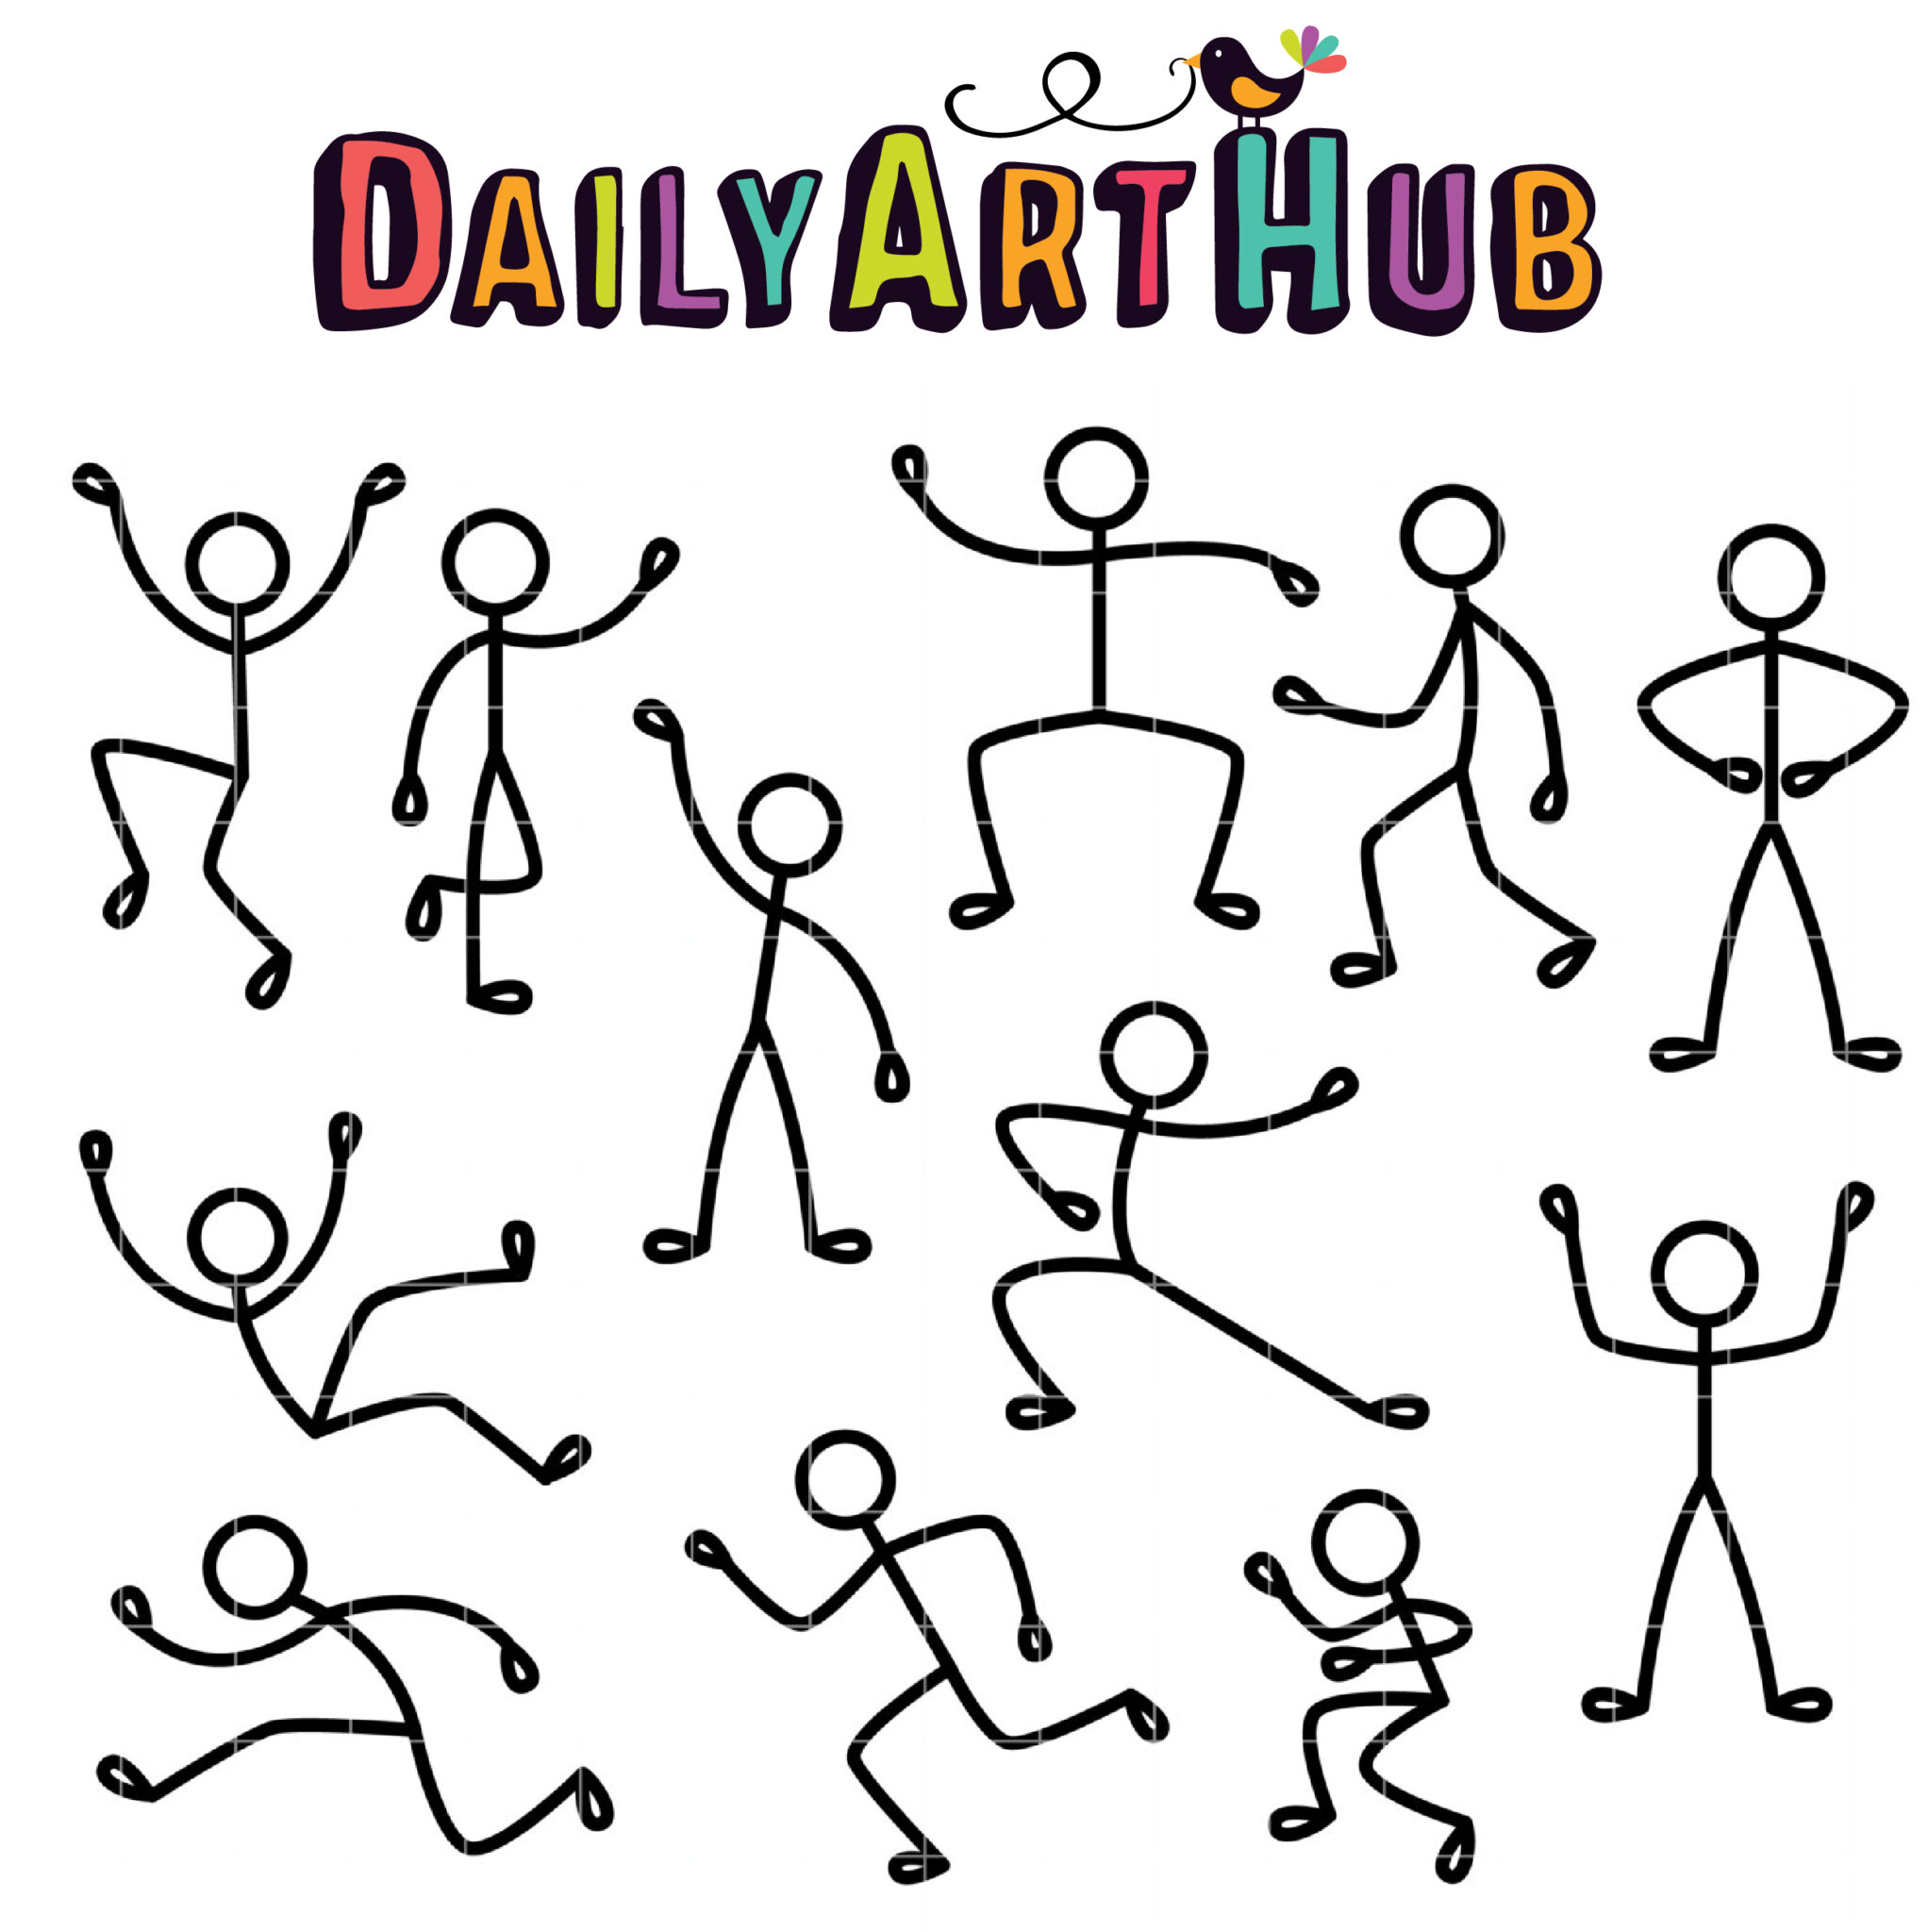 https://www.dailyarthub.com/wp-content/uploads/2018/03/DAH_Stickman-Gestures-scaled.jpg